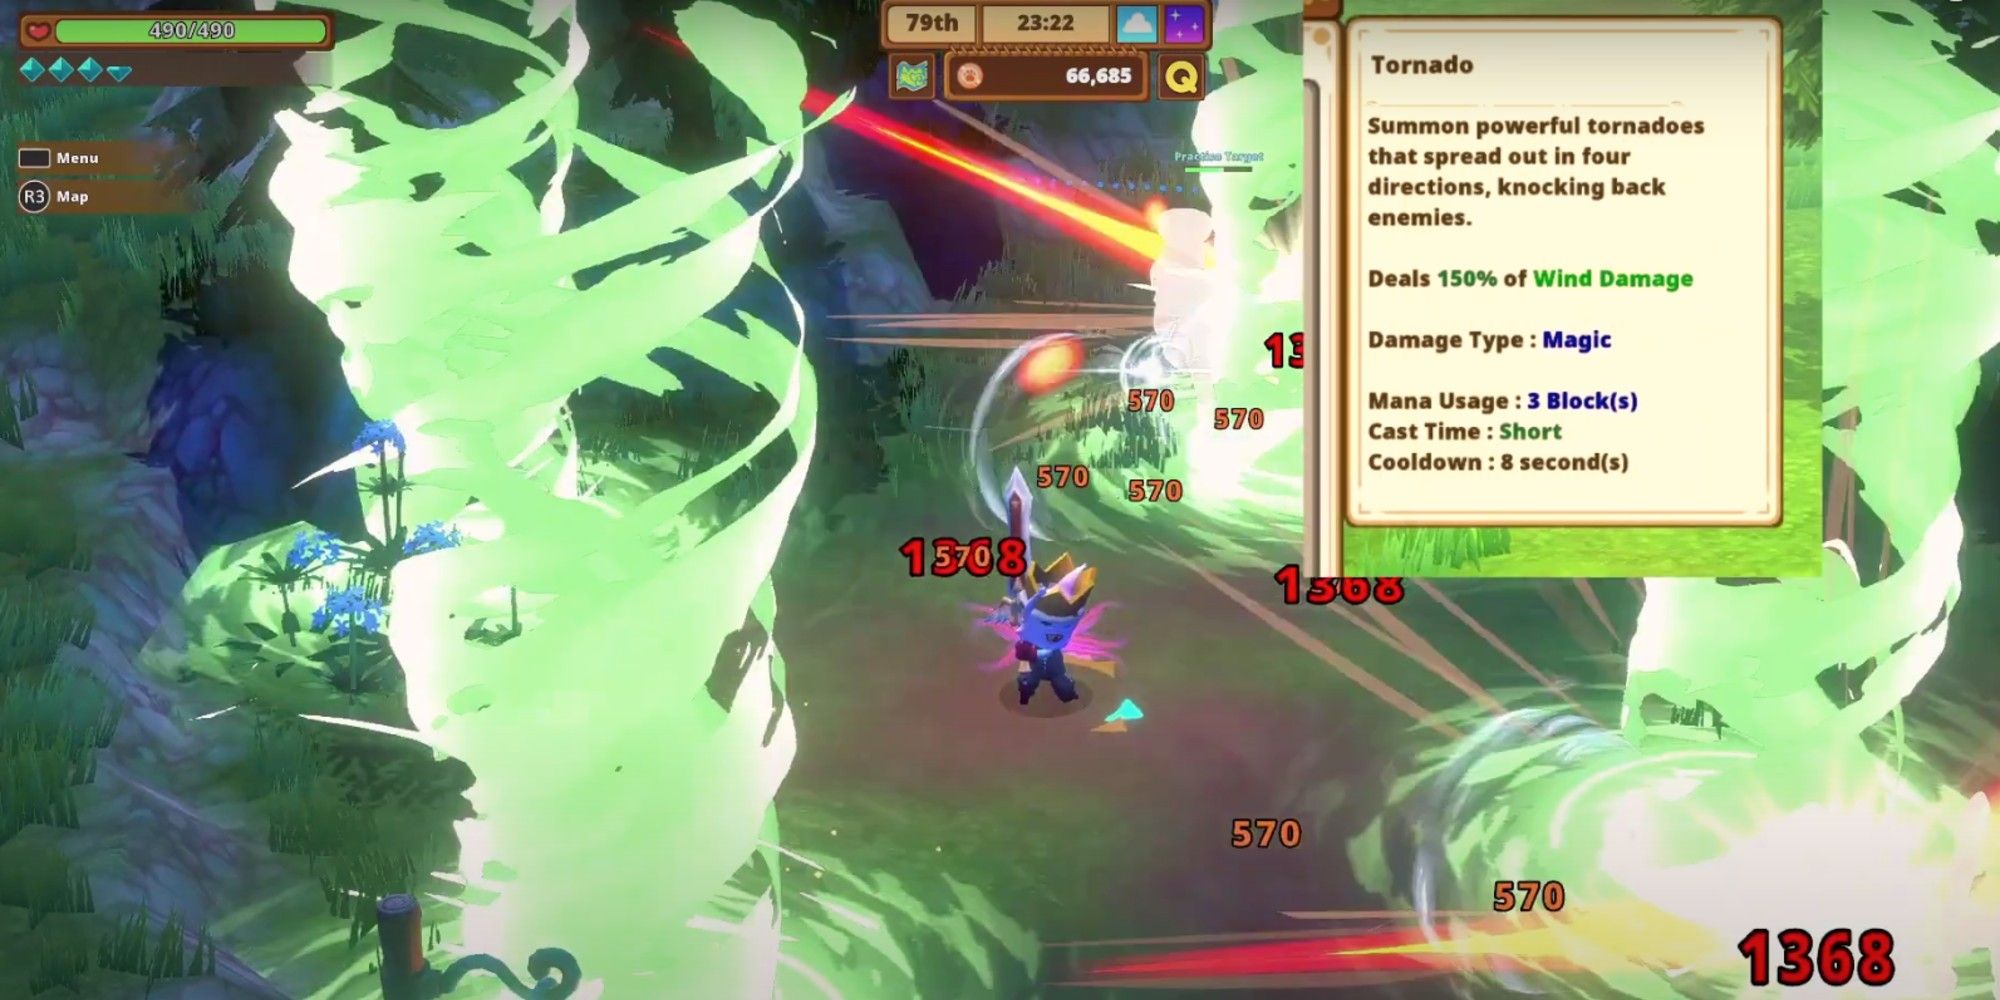 Tornado spells surrounding player